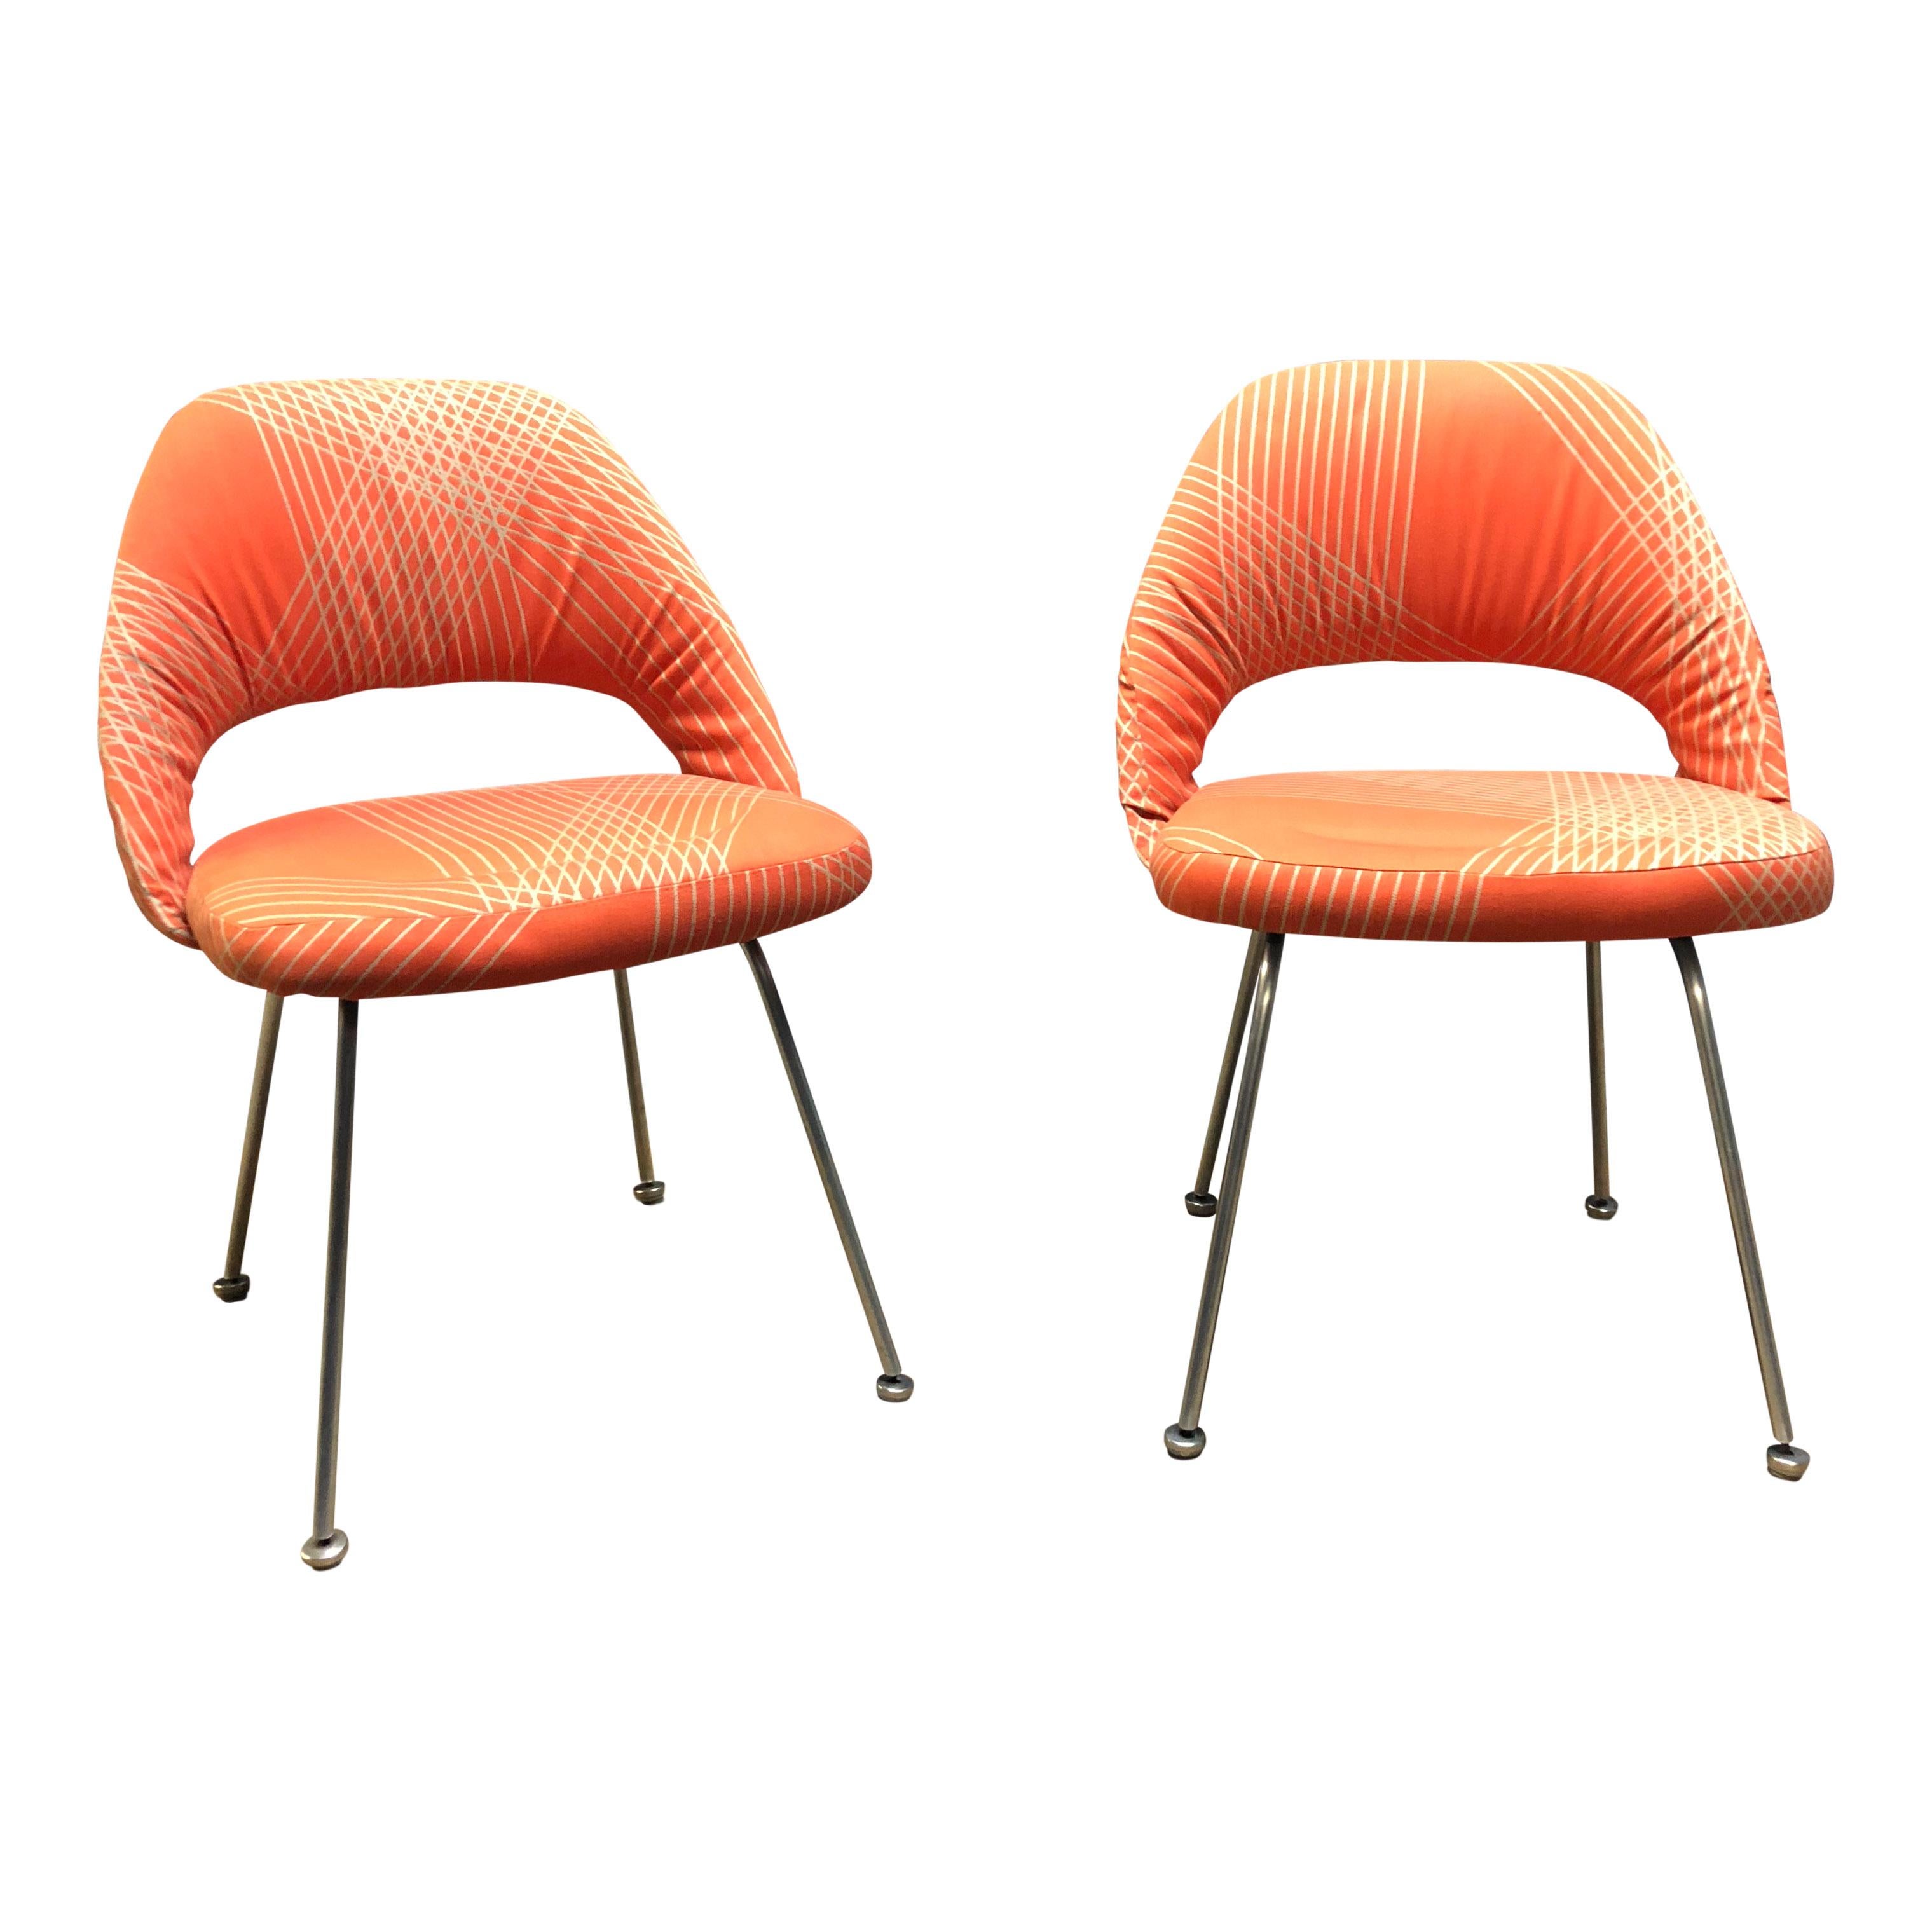 American Rare Eero Saarinen for Knoll Chairs on Aluminum Legs